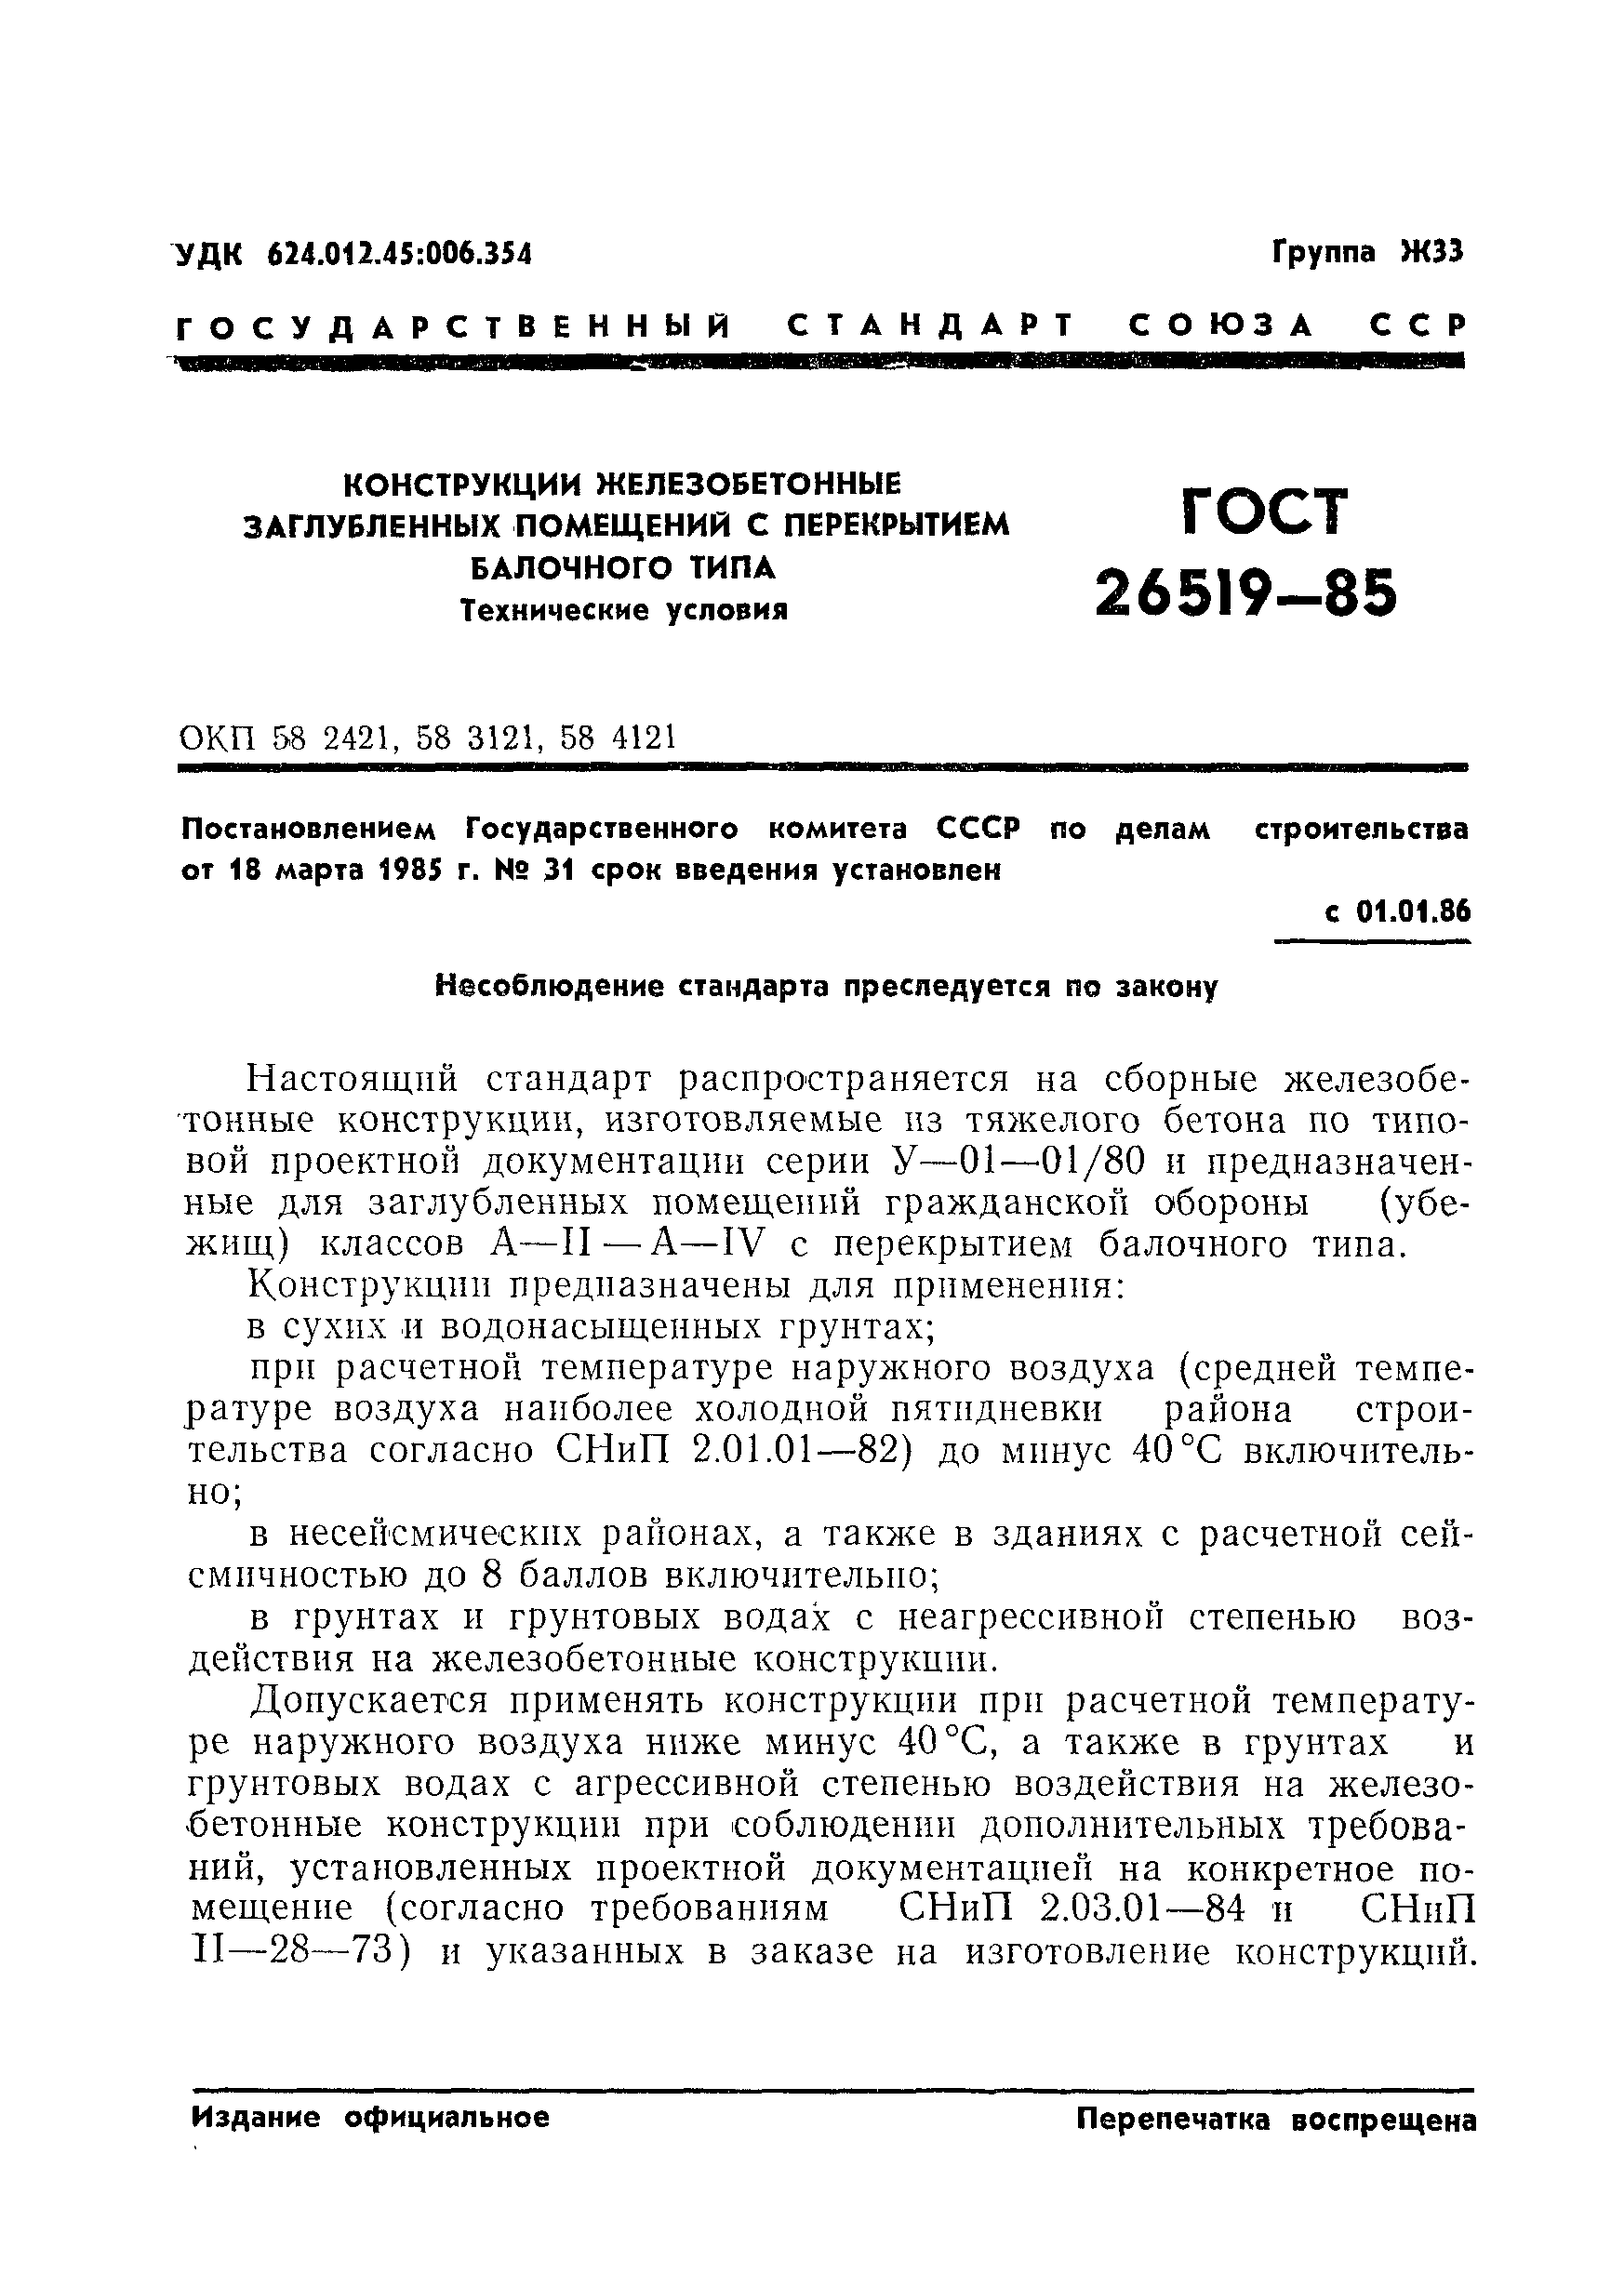 ГОСТ 26519-85